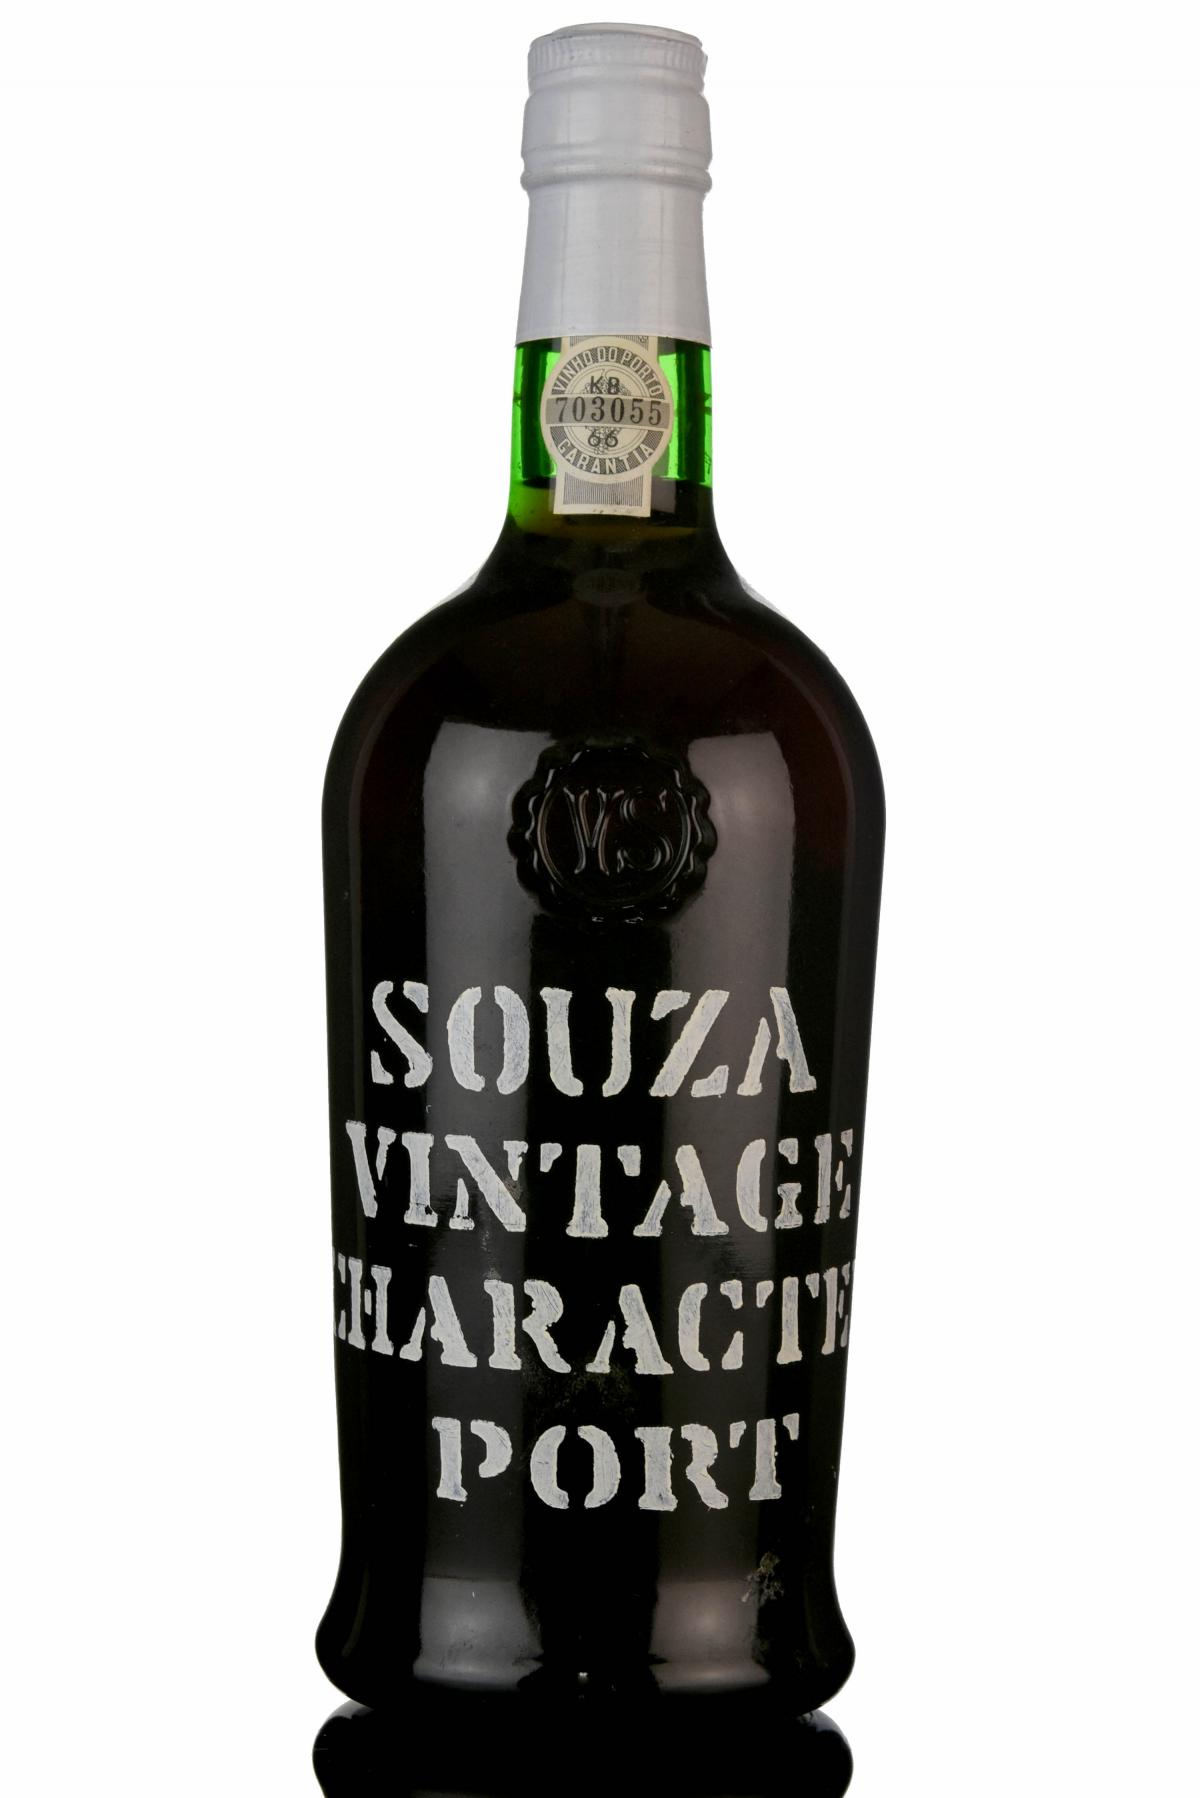 Souza Vintage Character Port